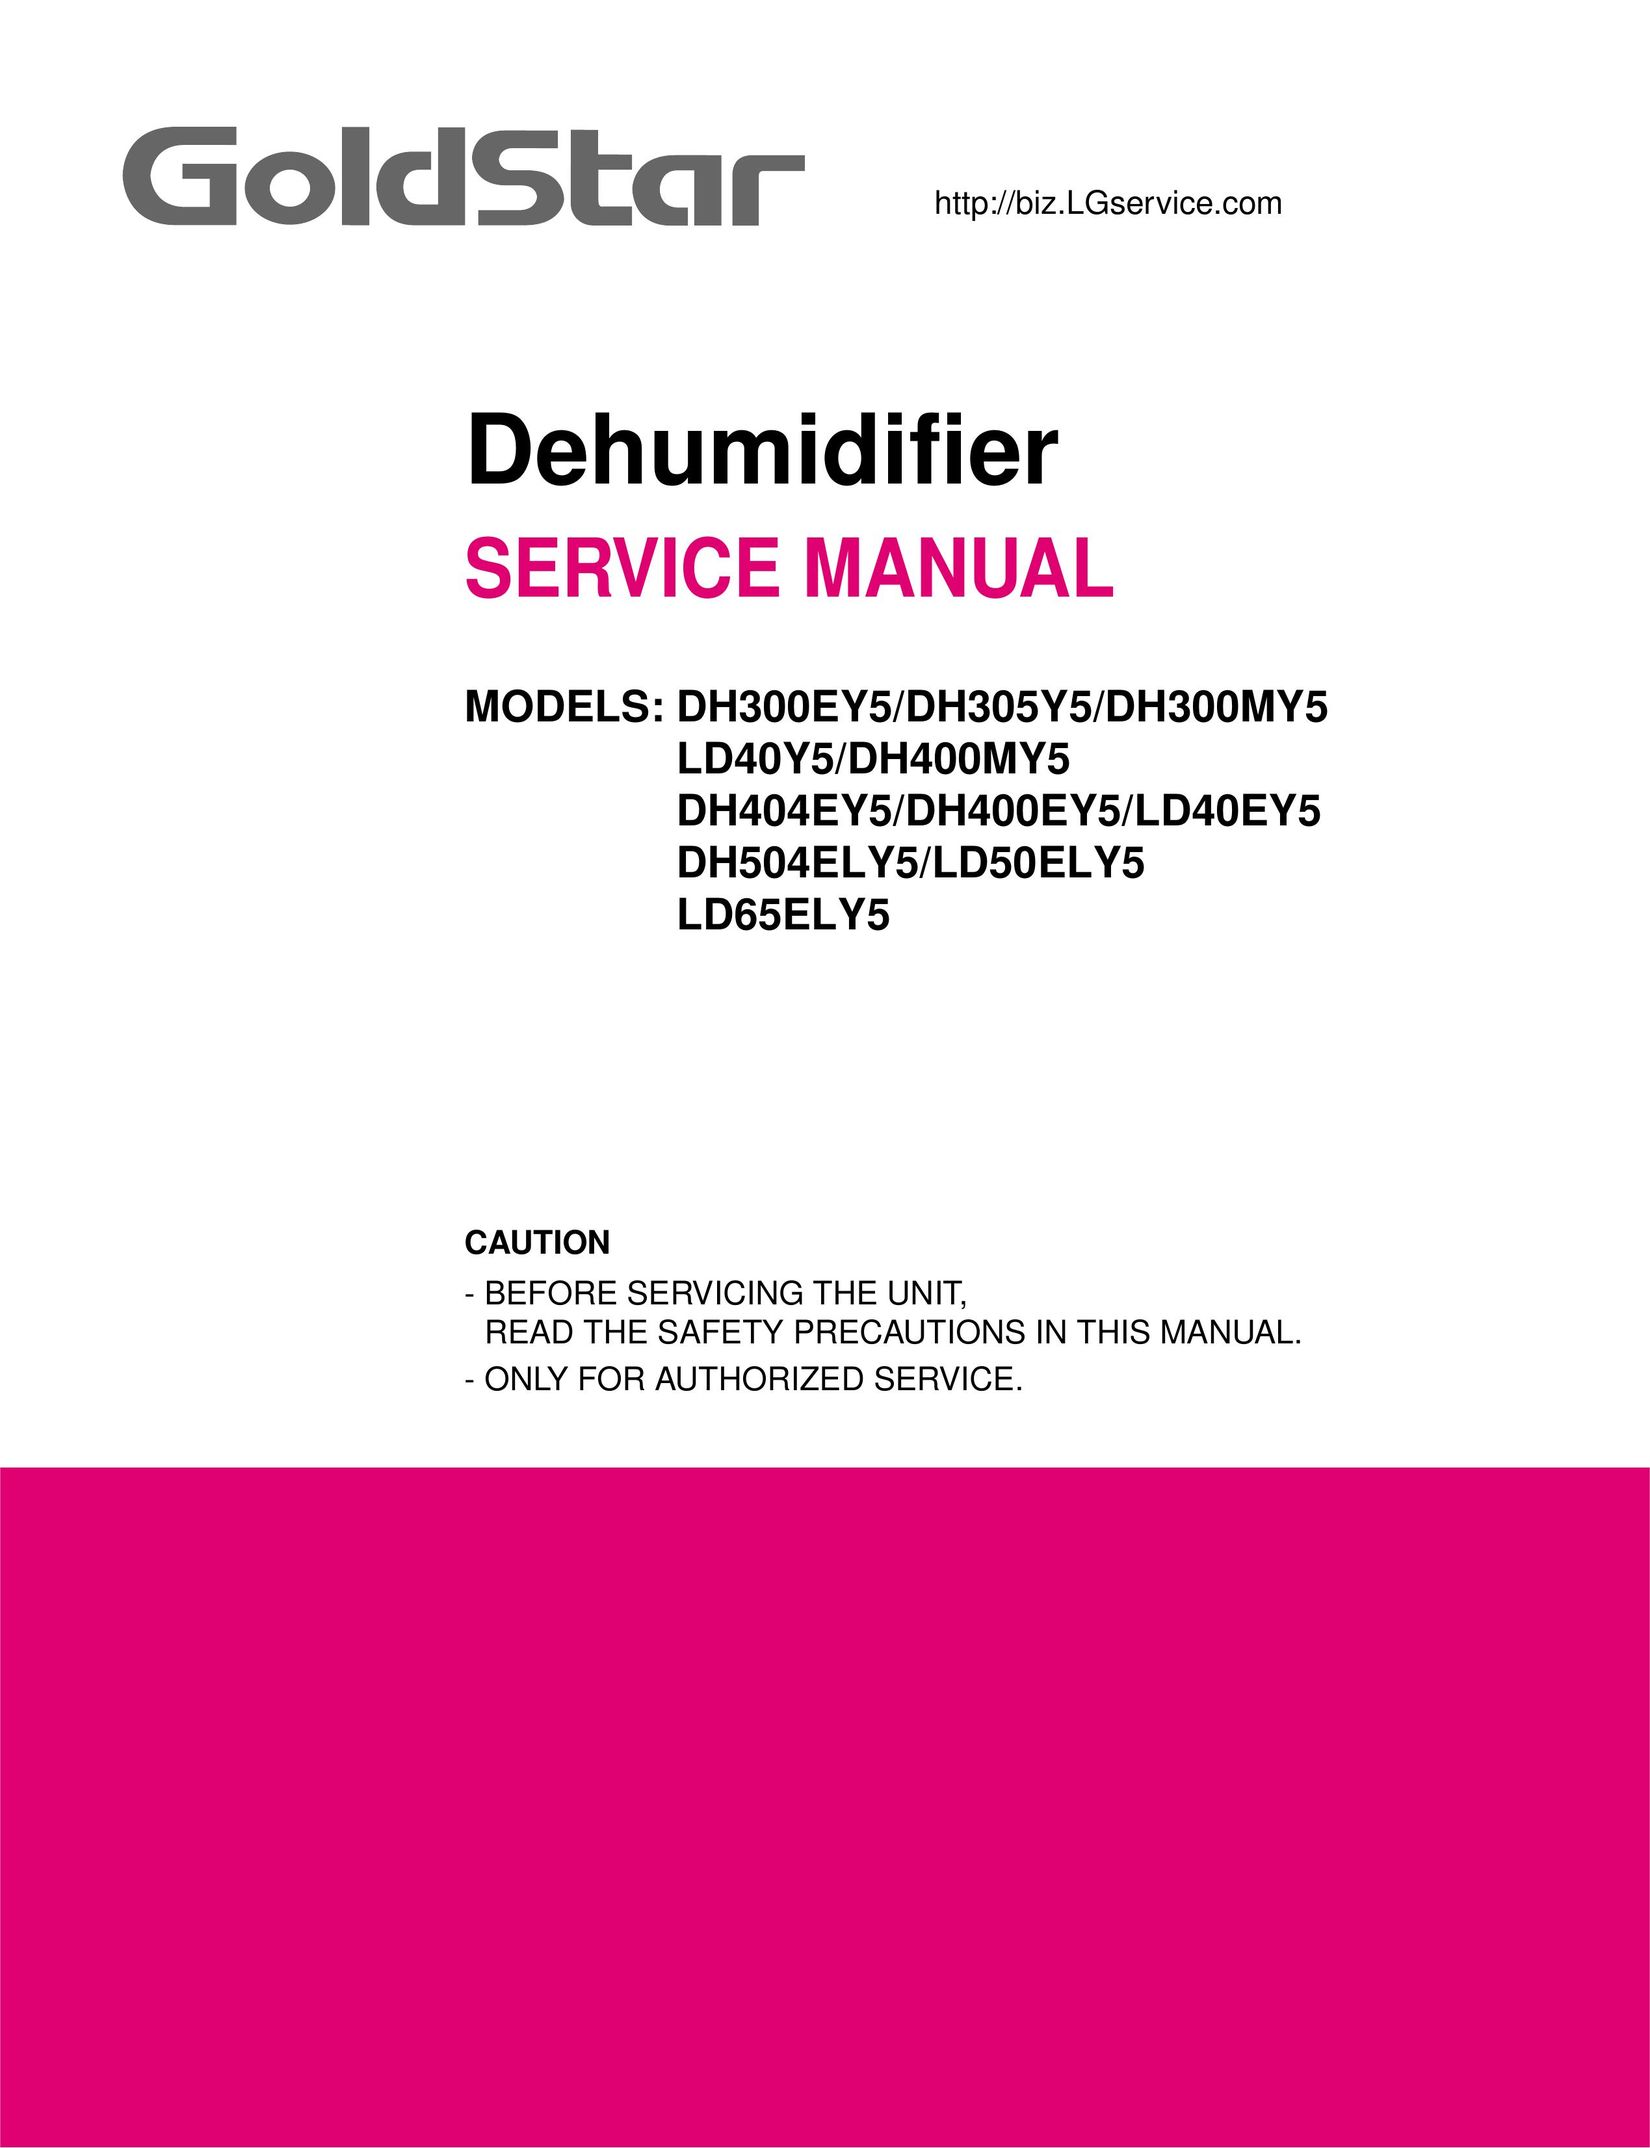 Frigidaire DH404EY5 Dehumidifier User Manual